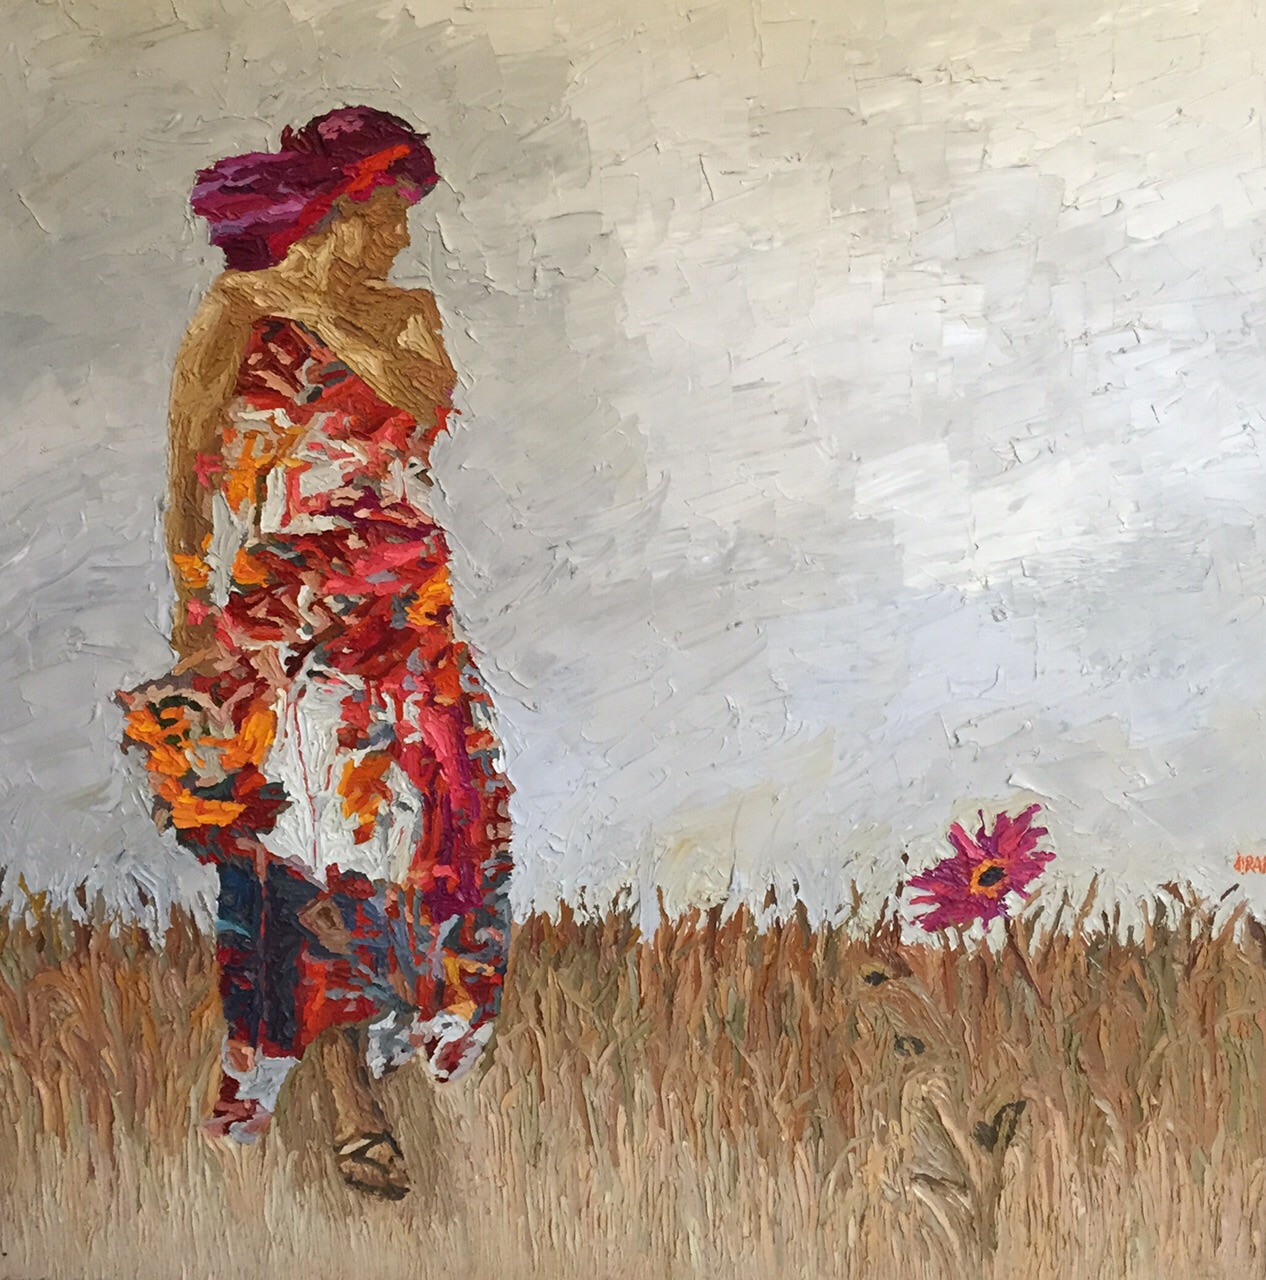 Field Of Dreams, oil on canvas, 134 x 134 cm